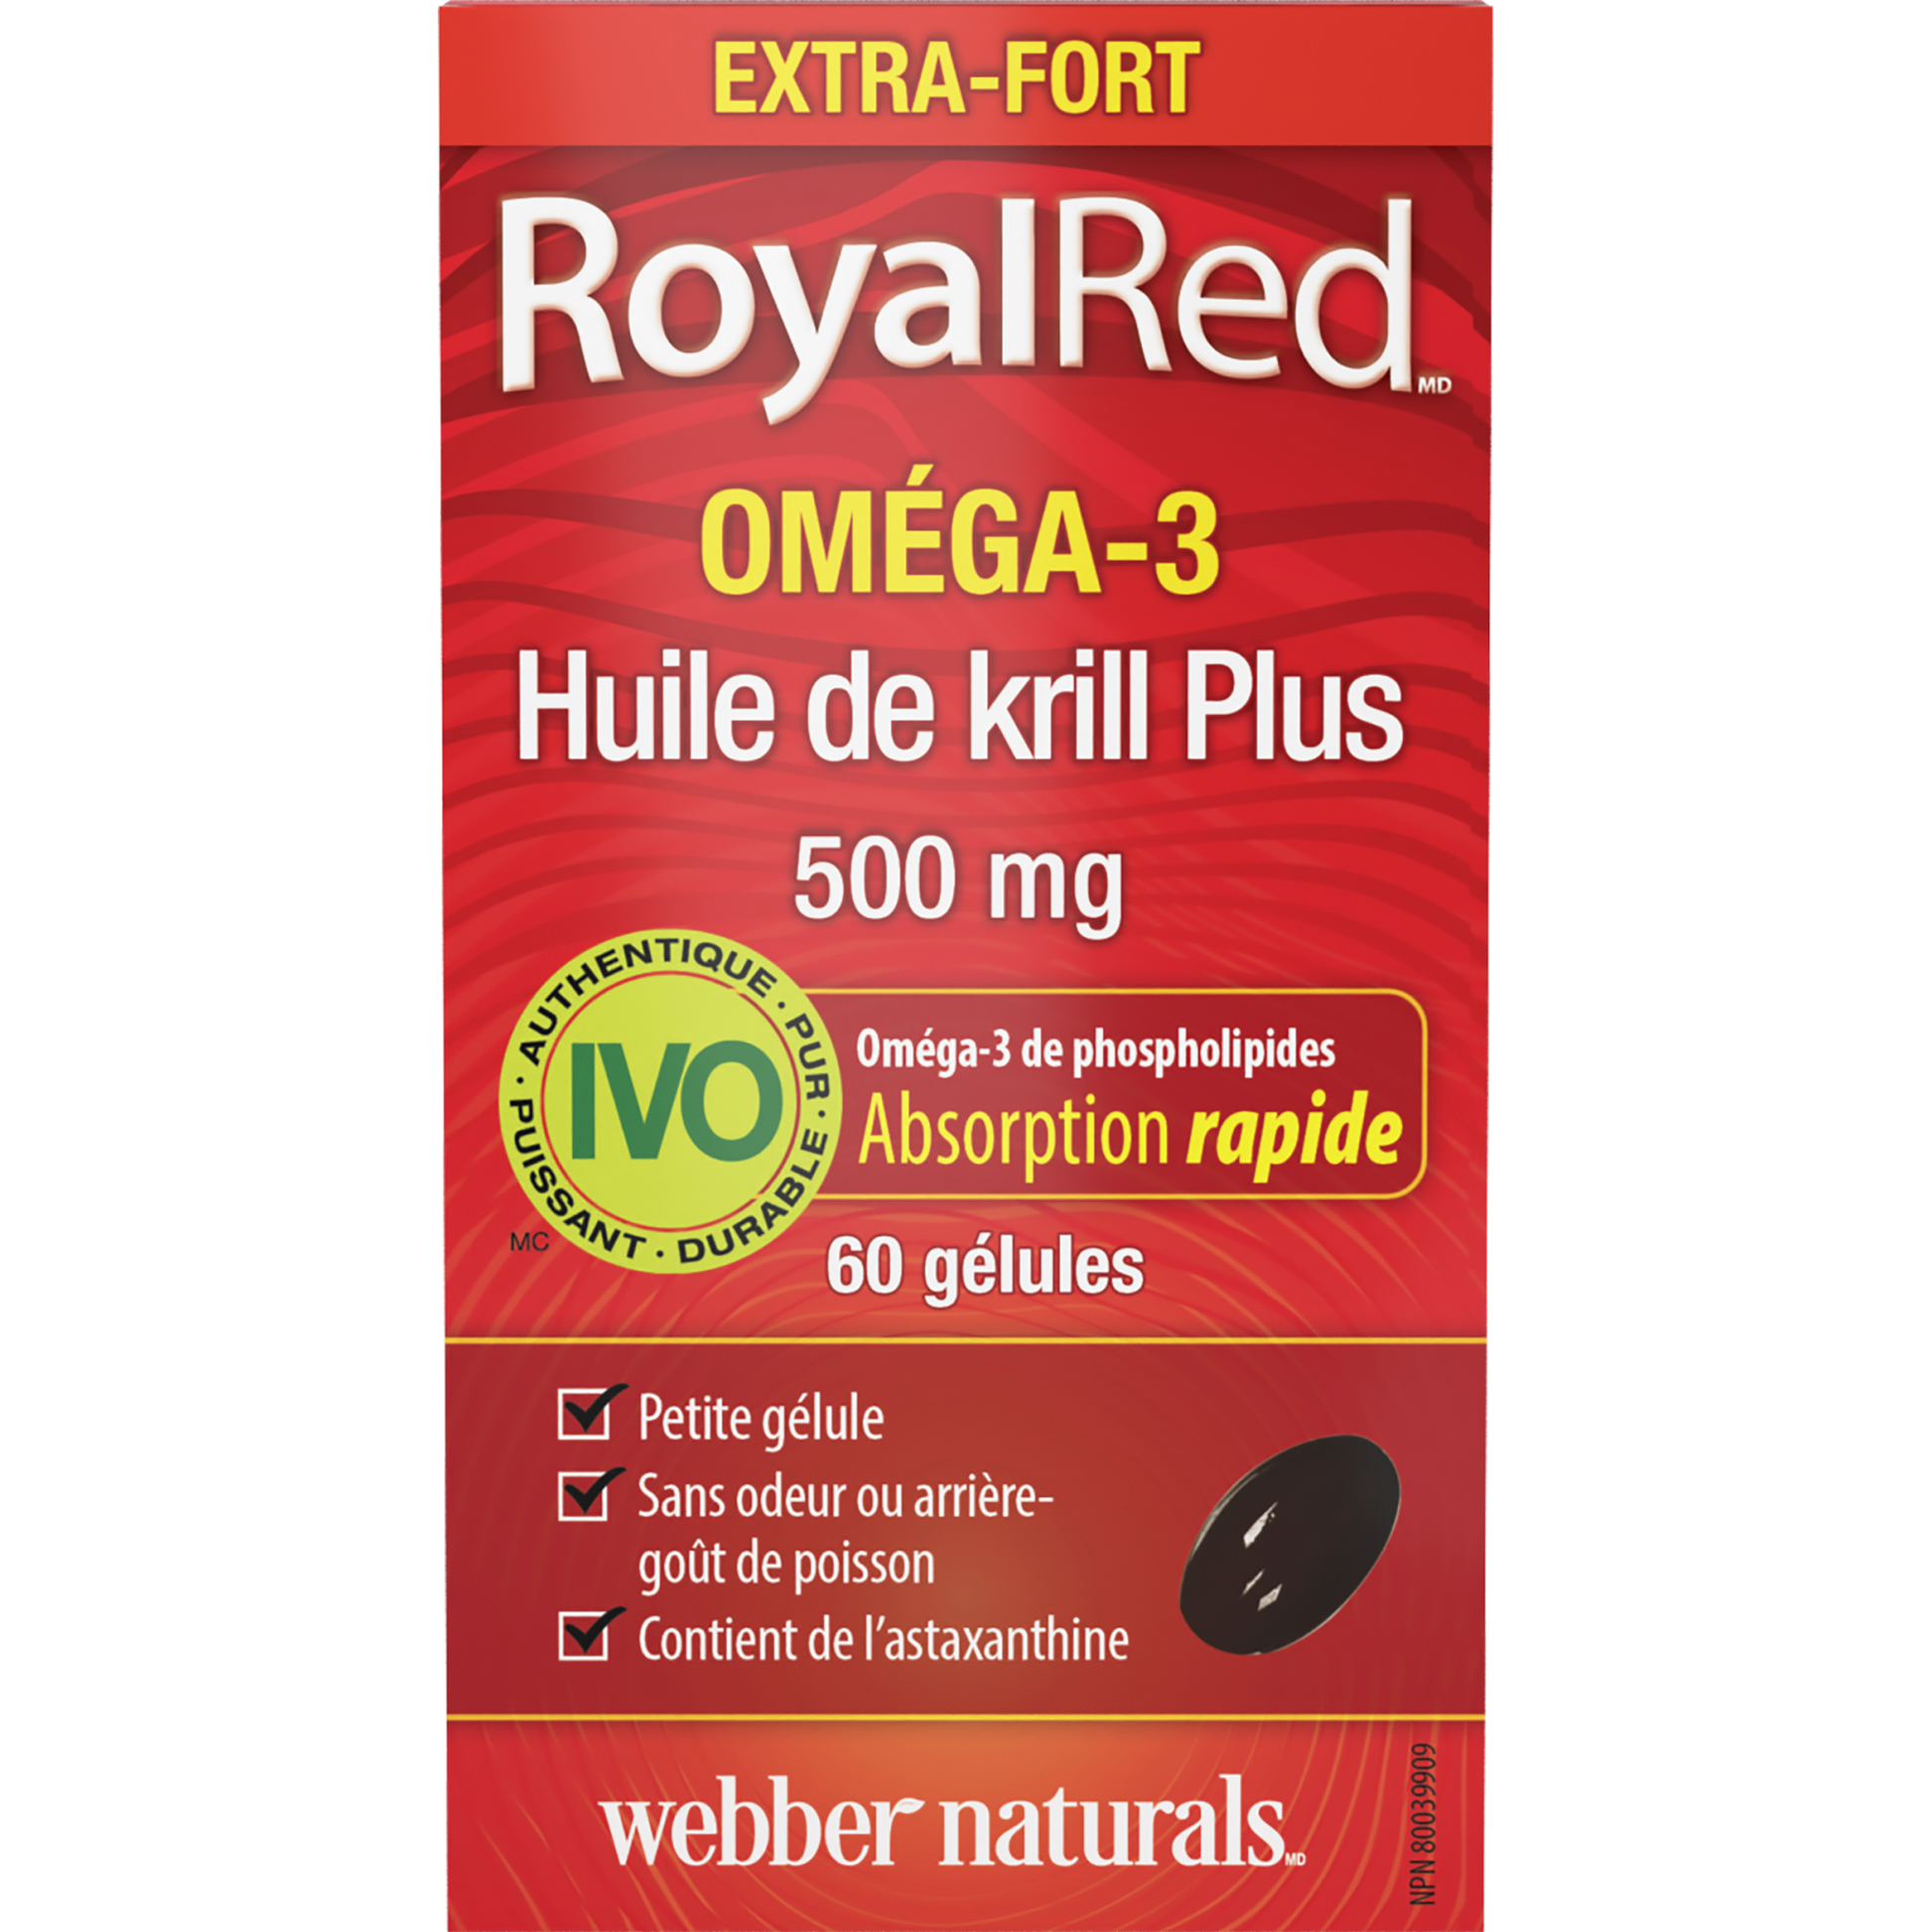 RoyalRed Oméga-3 Huile de krill Plus Ultra-fort 500 mg for Webber Naturals|v|hi-res|WN3399